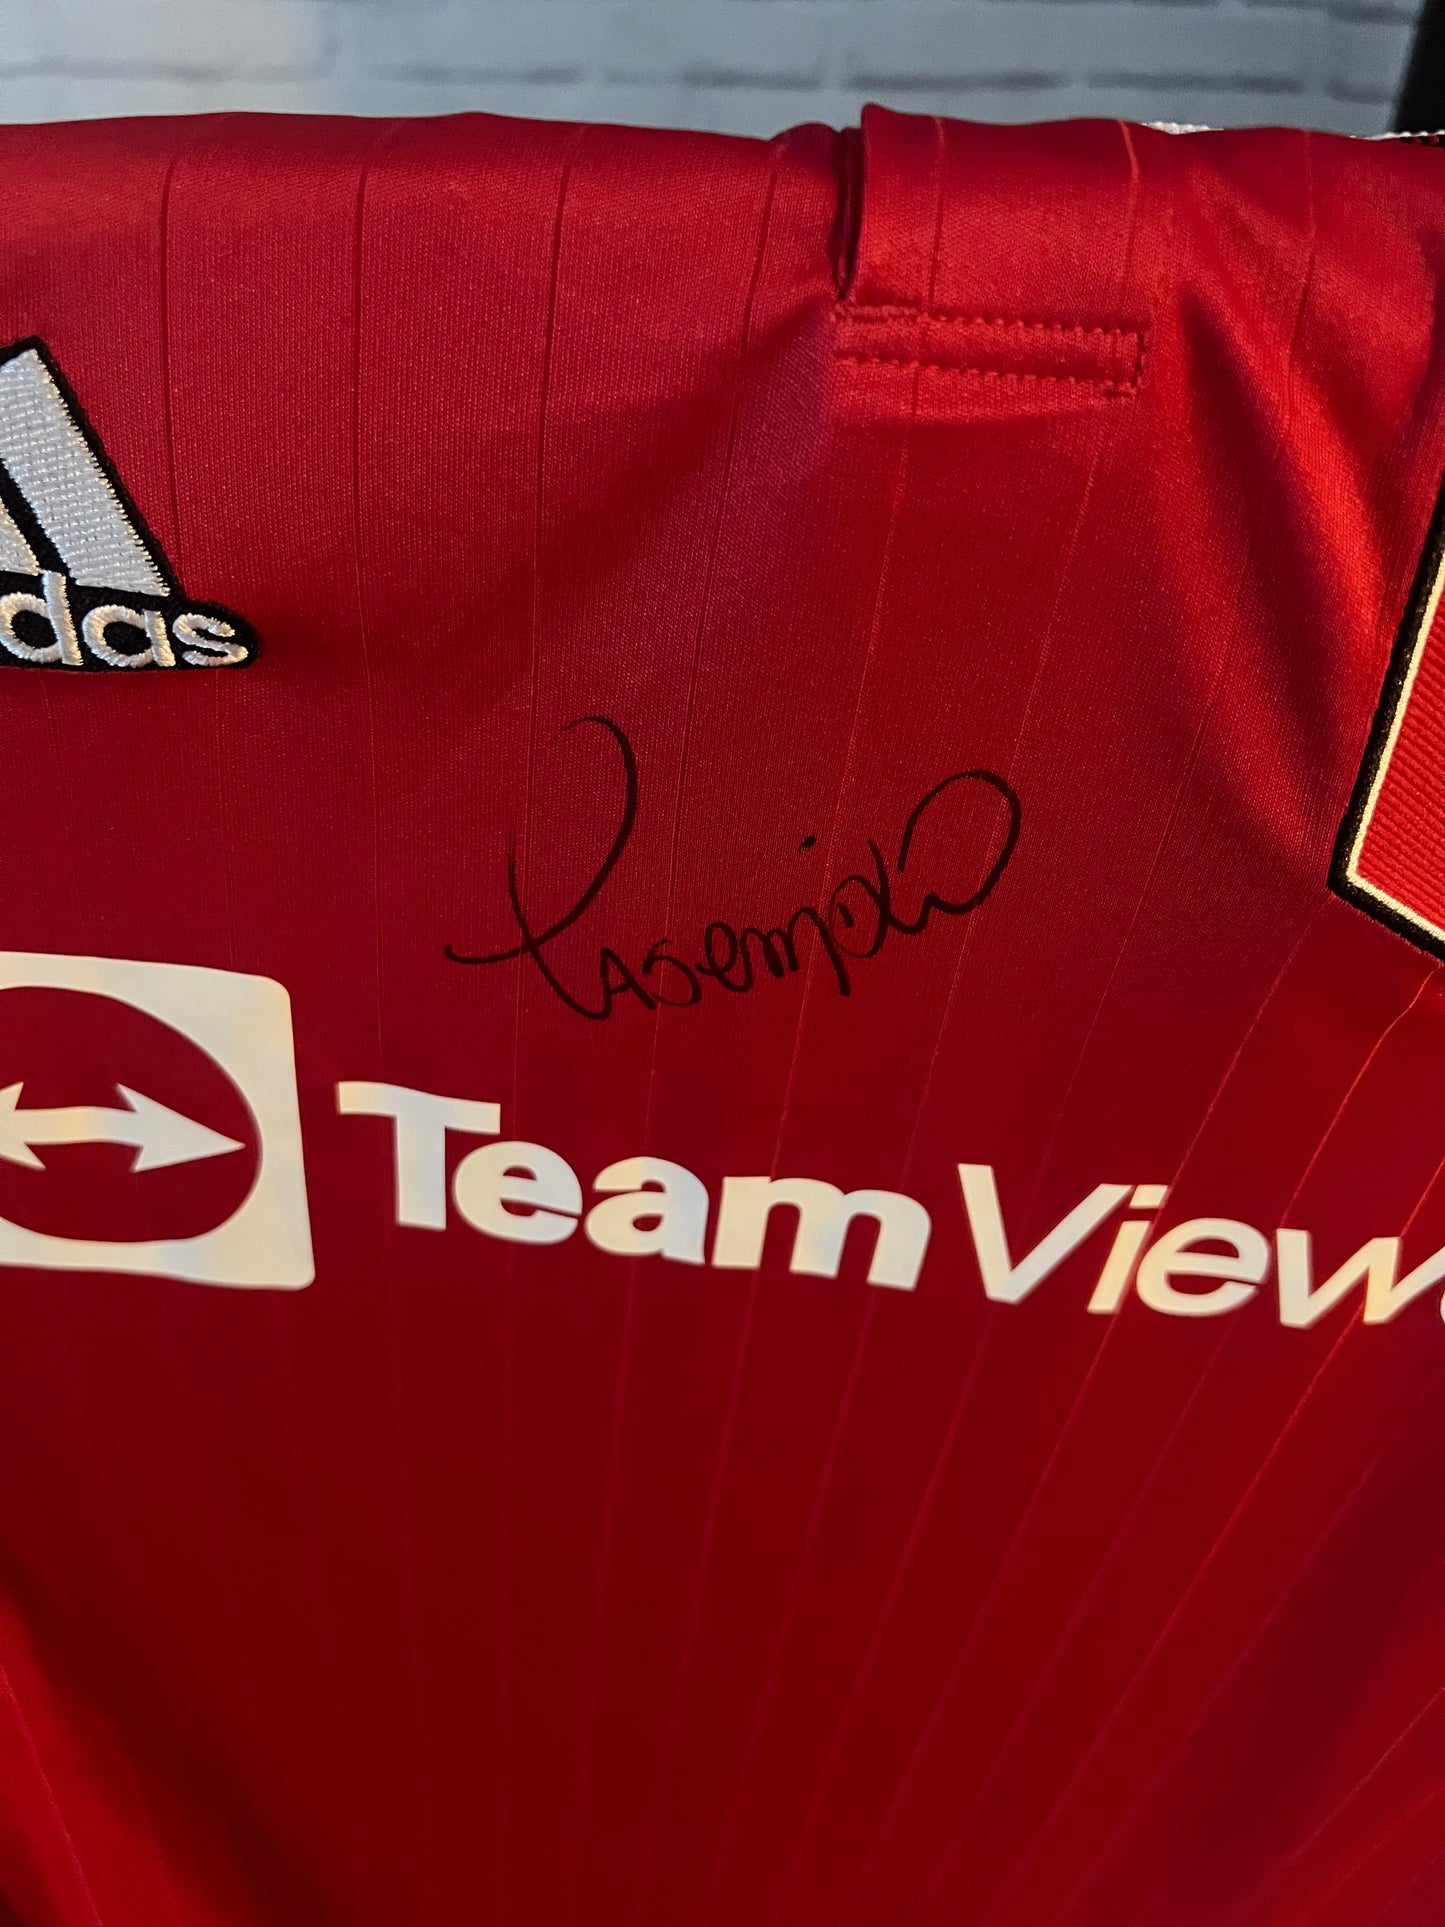 Signed Casemiro Manchester United Home Shirt